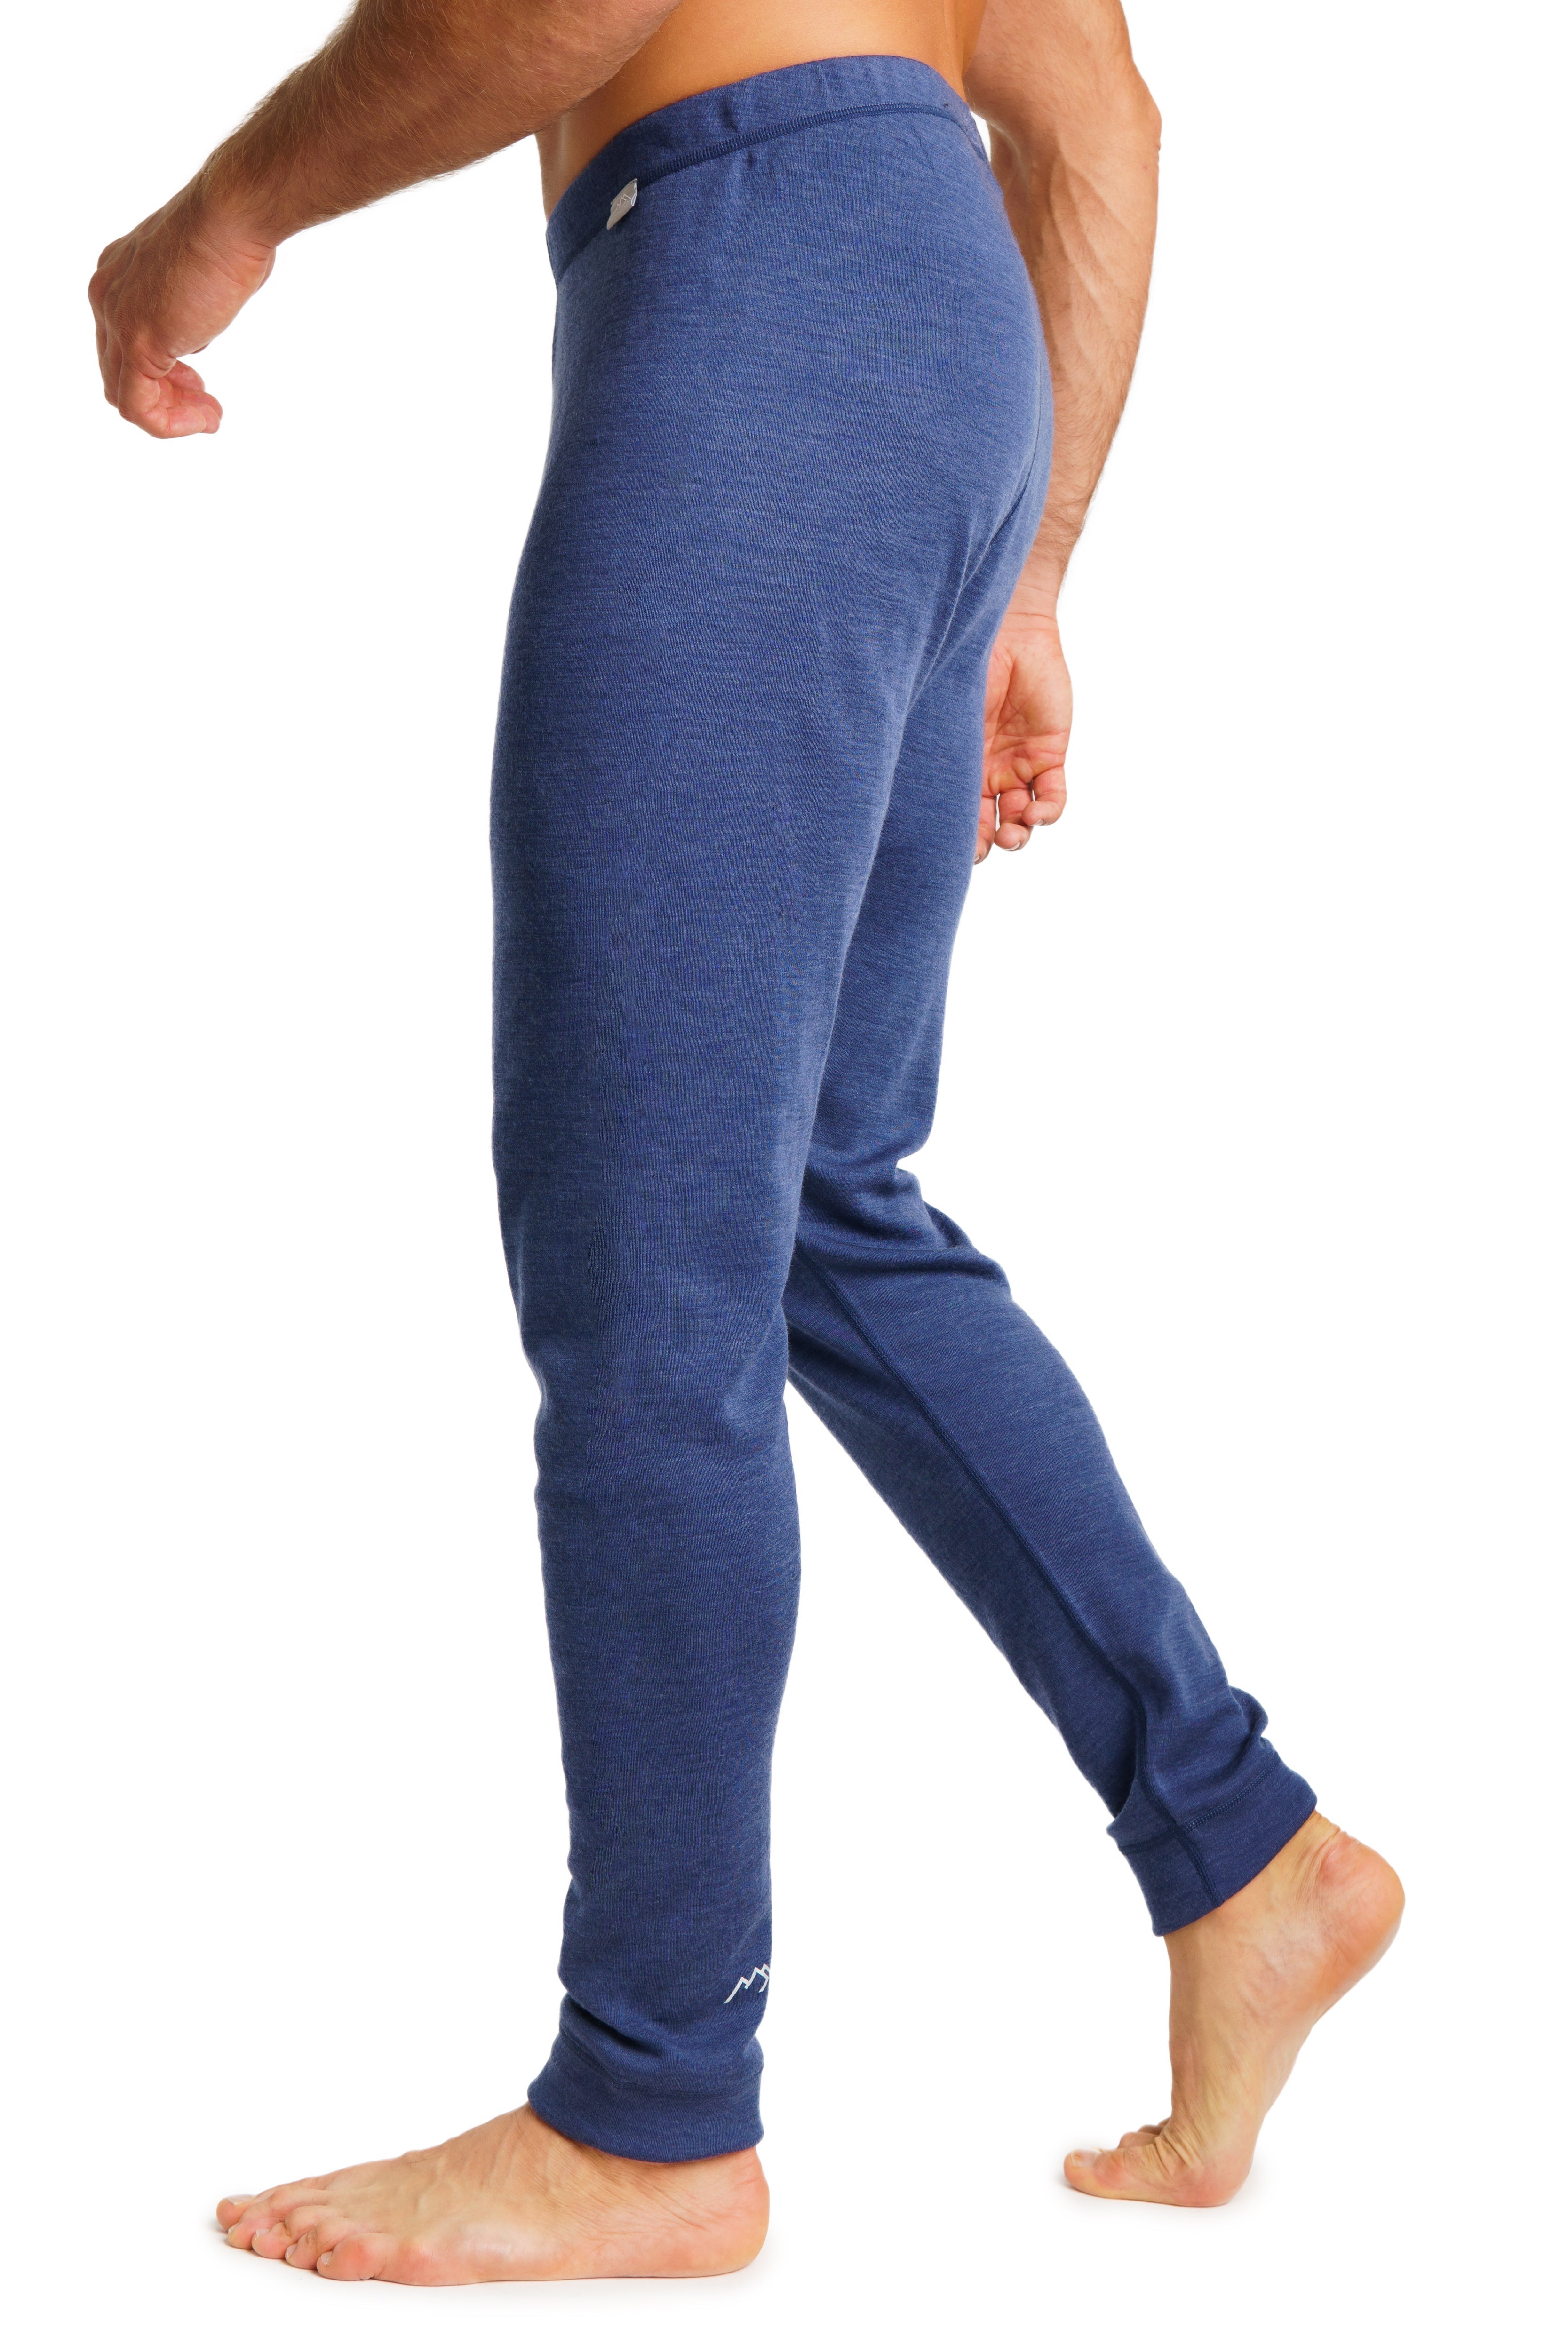 Merino Wool Pants - Midweight Base Layer, Bottom, Underwear, Thermal